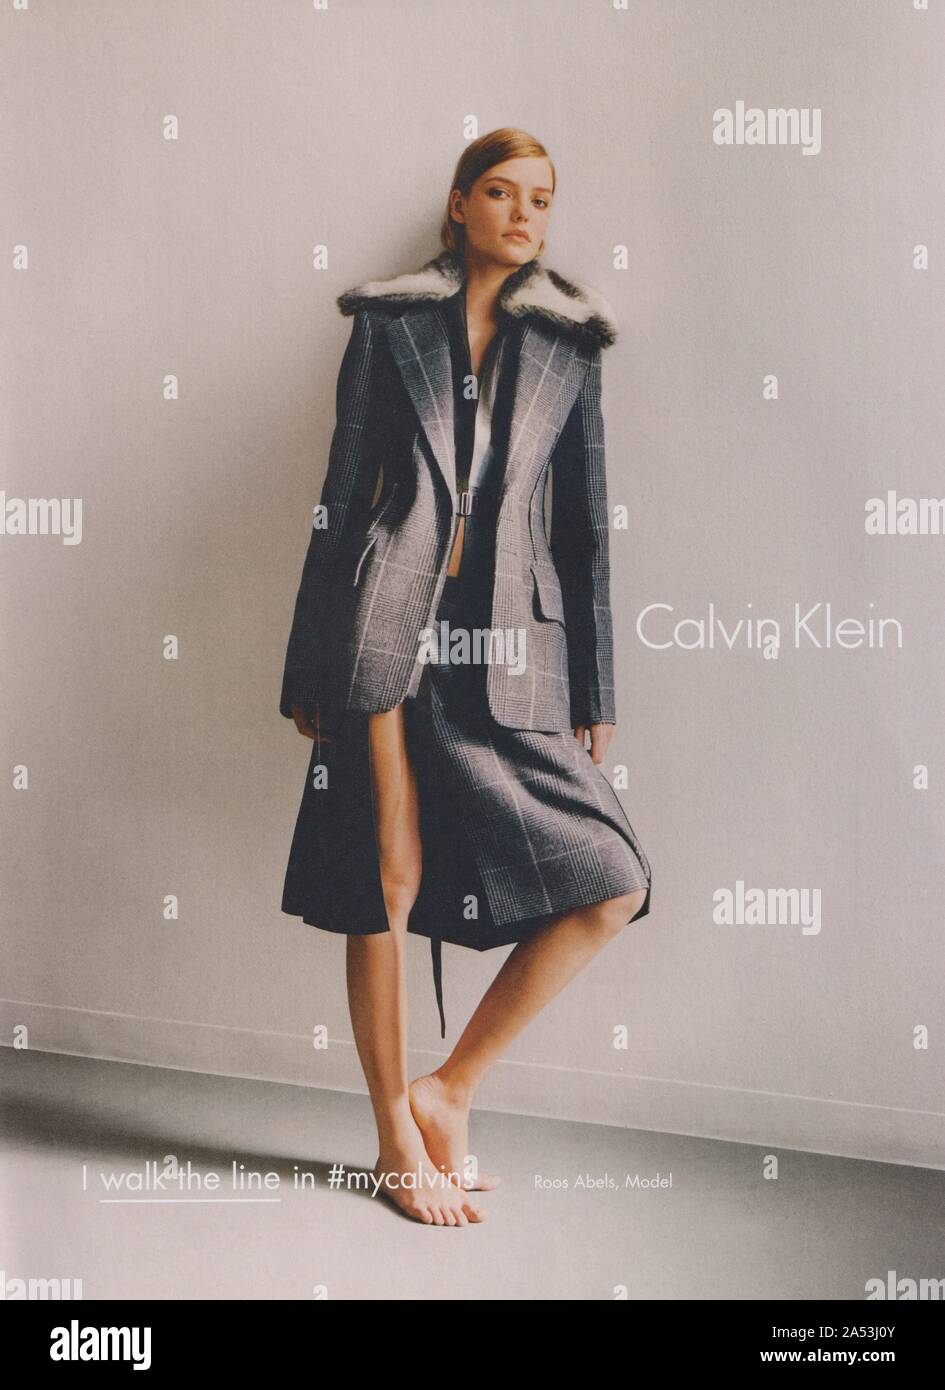 poster advertising Calvin Klein fashion house, paper magazine from 2015, CK  advertisement, creative Calvin Klein 2010s advert Stock Photo - Alamy